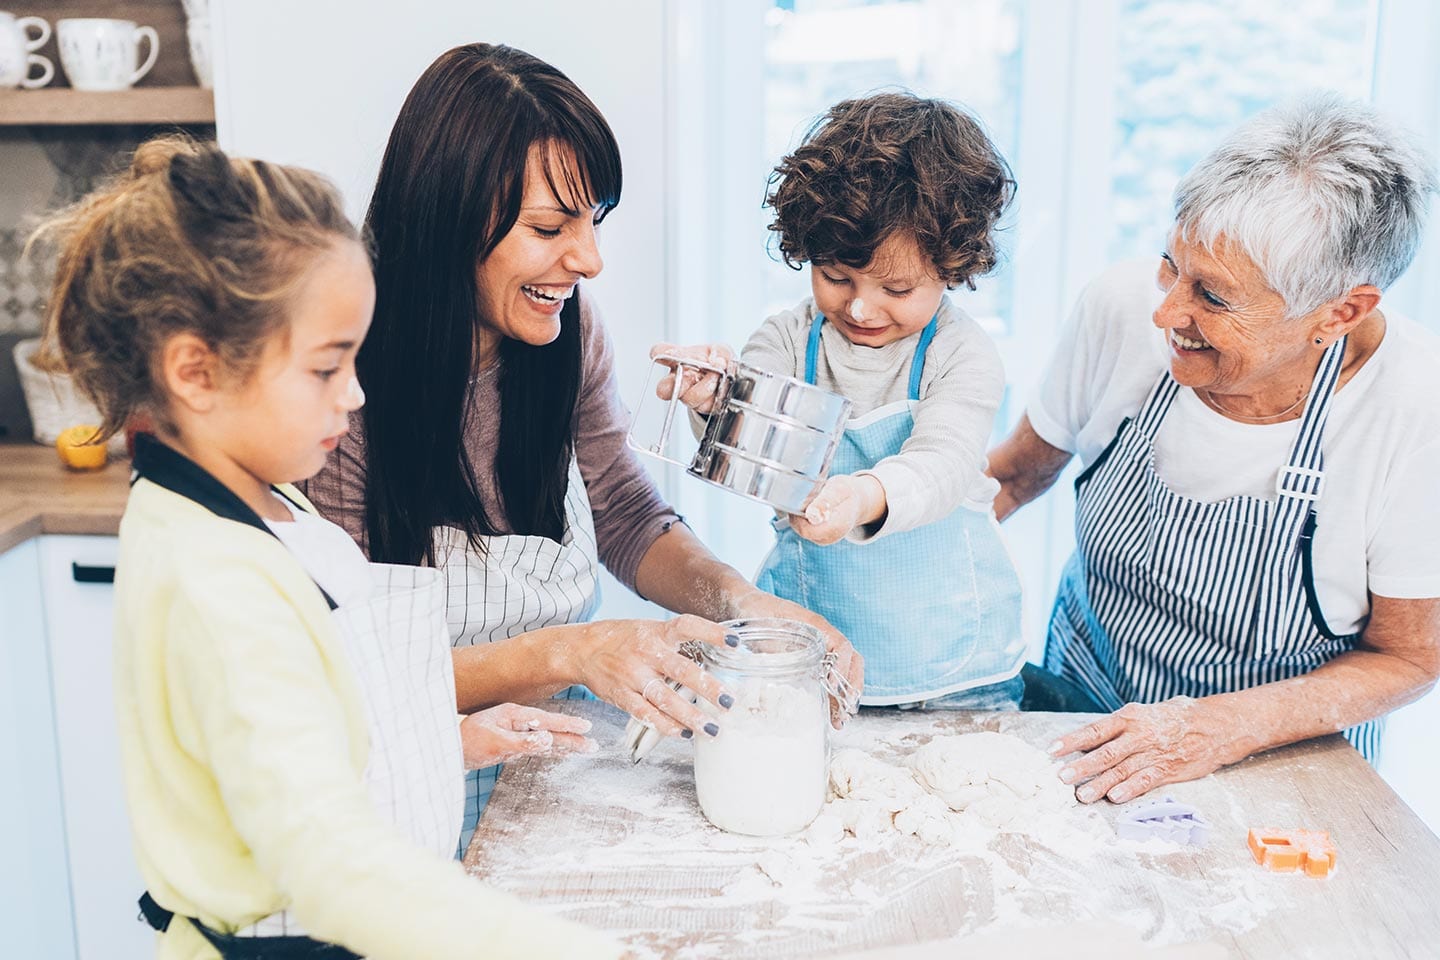 grandma, mom, and children baking together